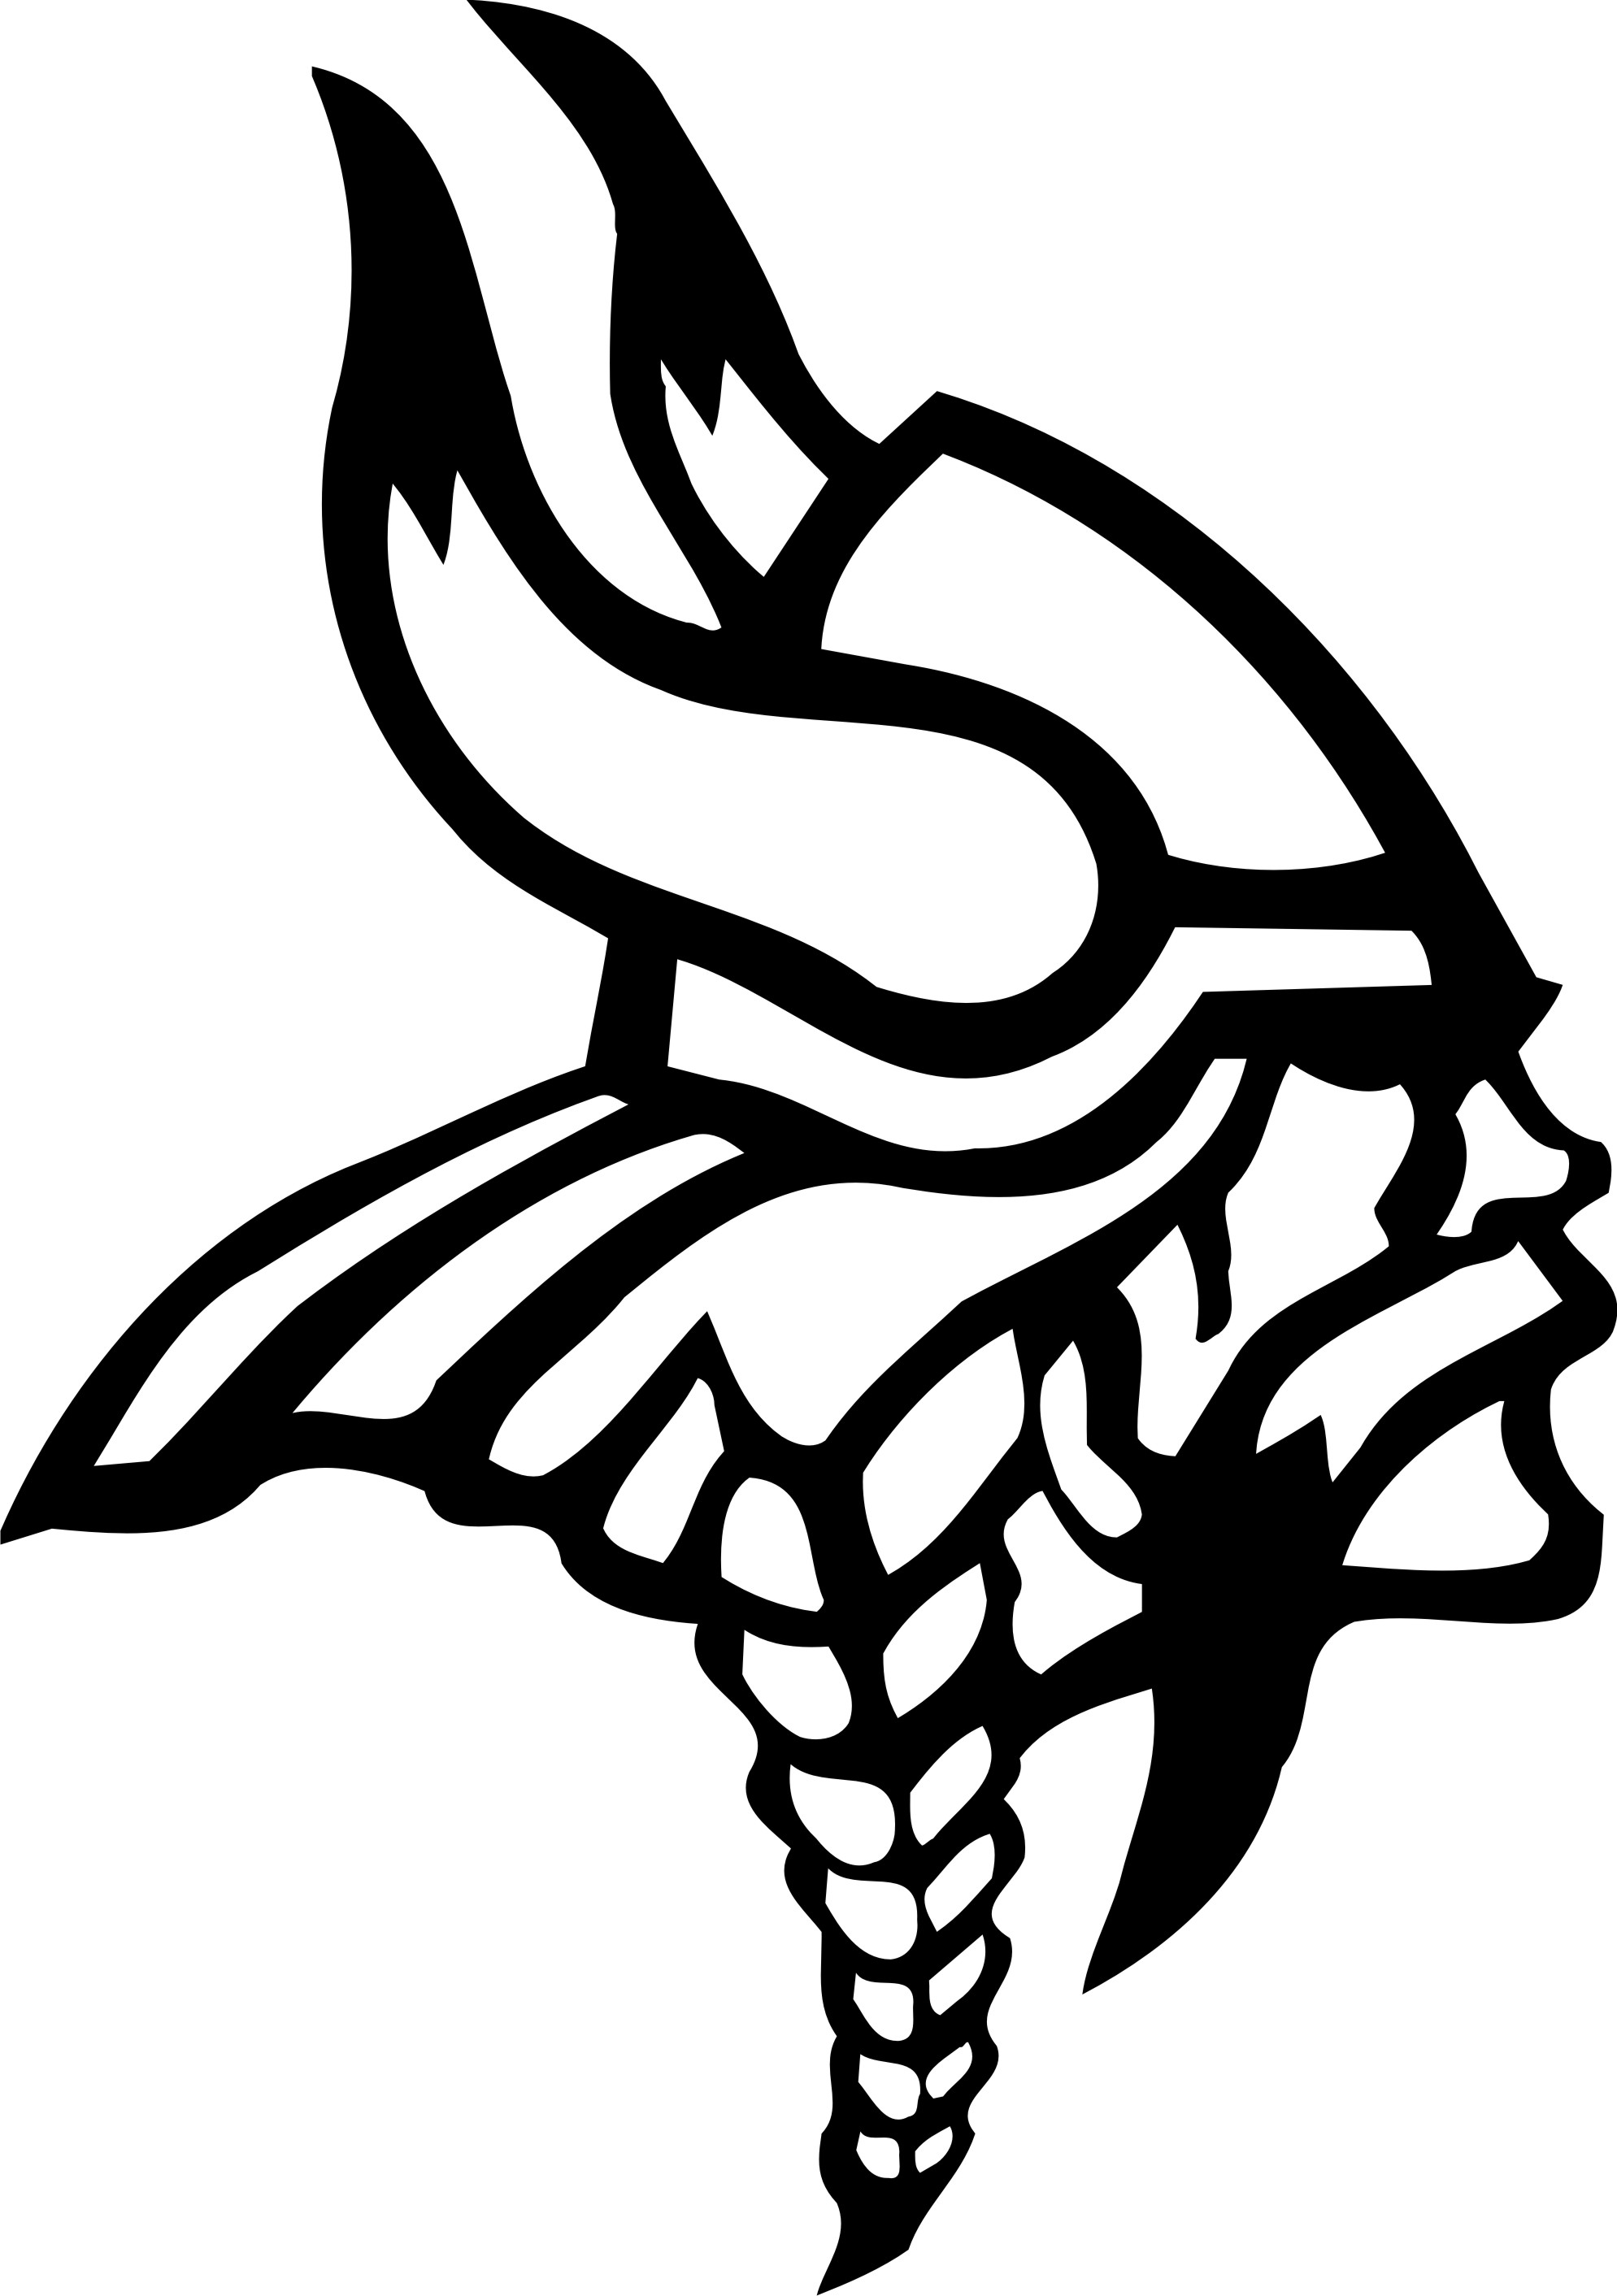 Vikings logo clipart 